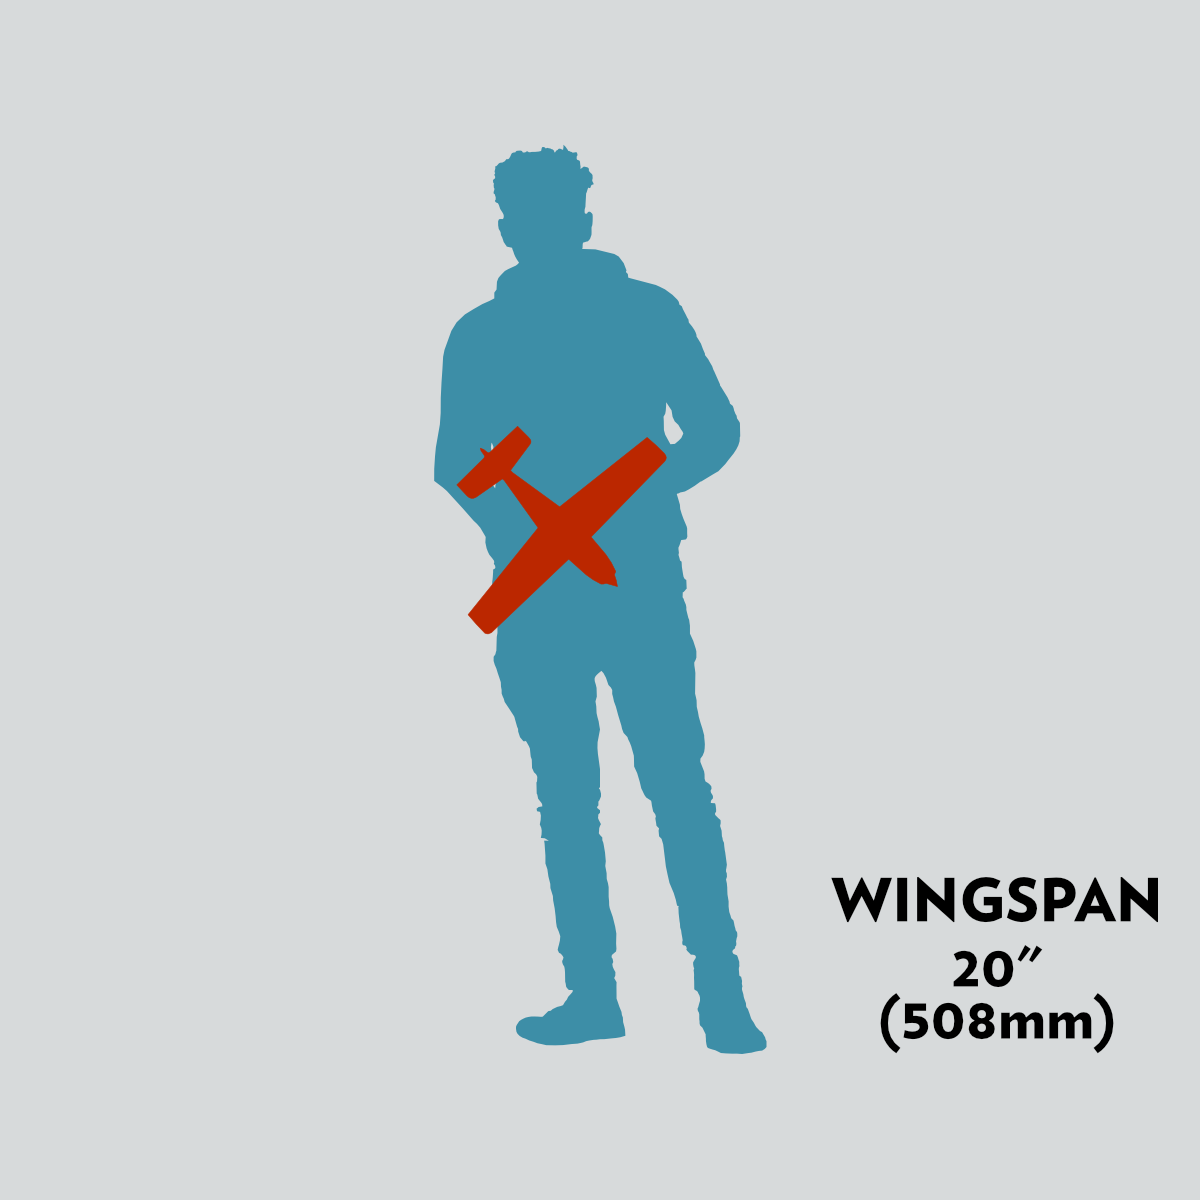 20" (508mm) wingspan